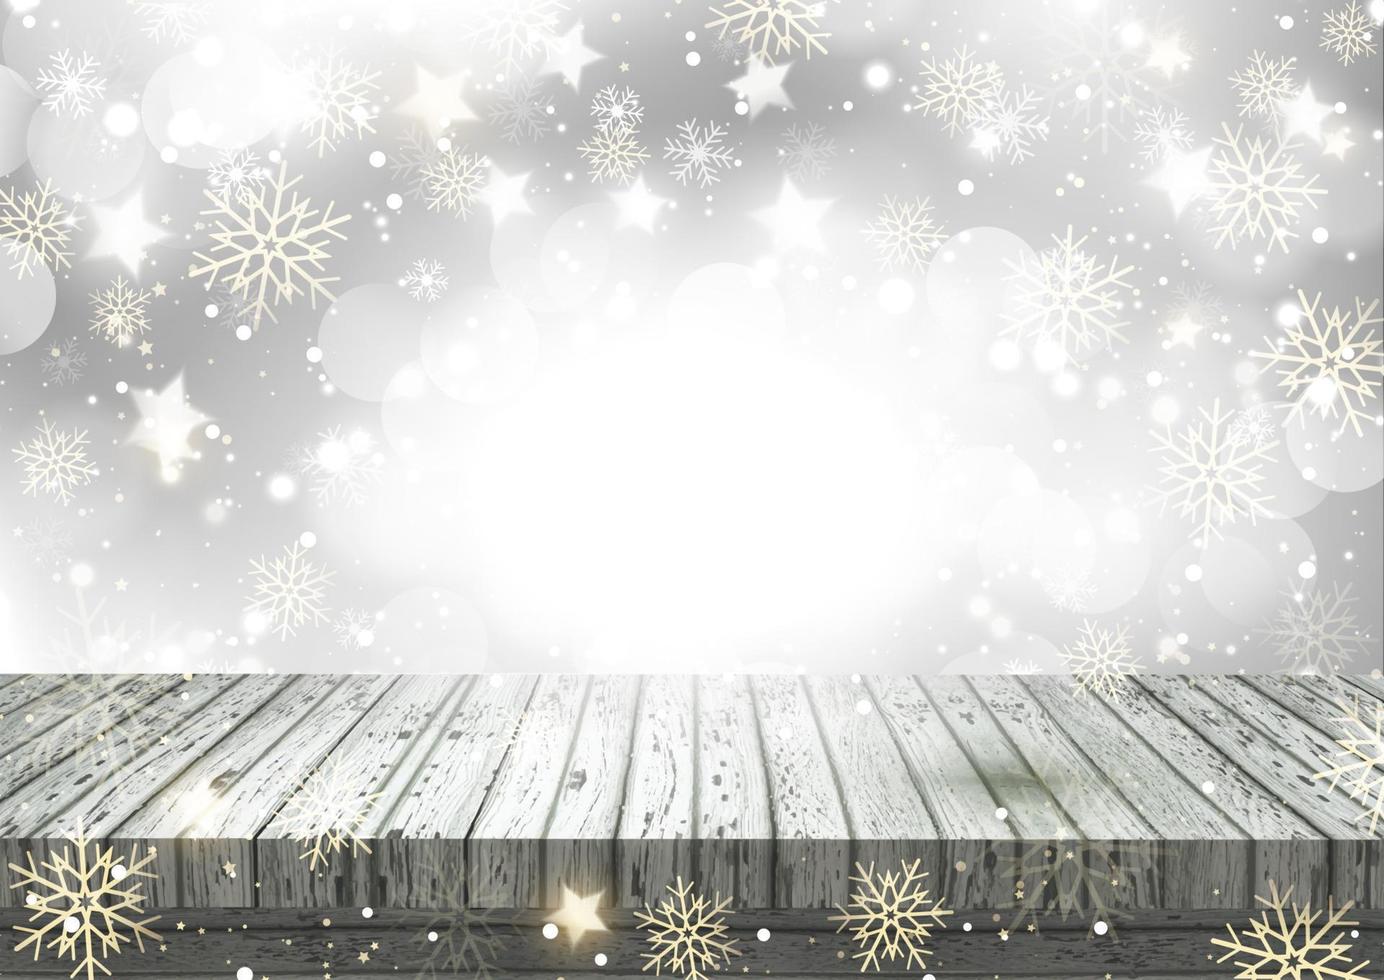 jul bakgrund med trä- tabell mot snöflinga design vektor